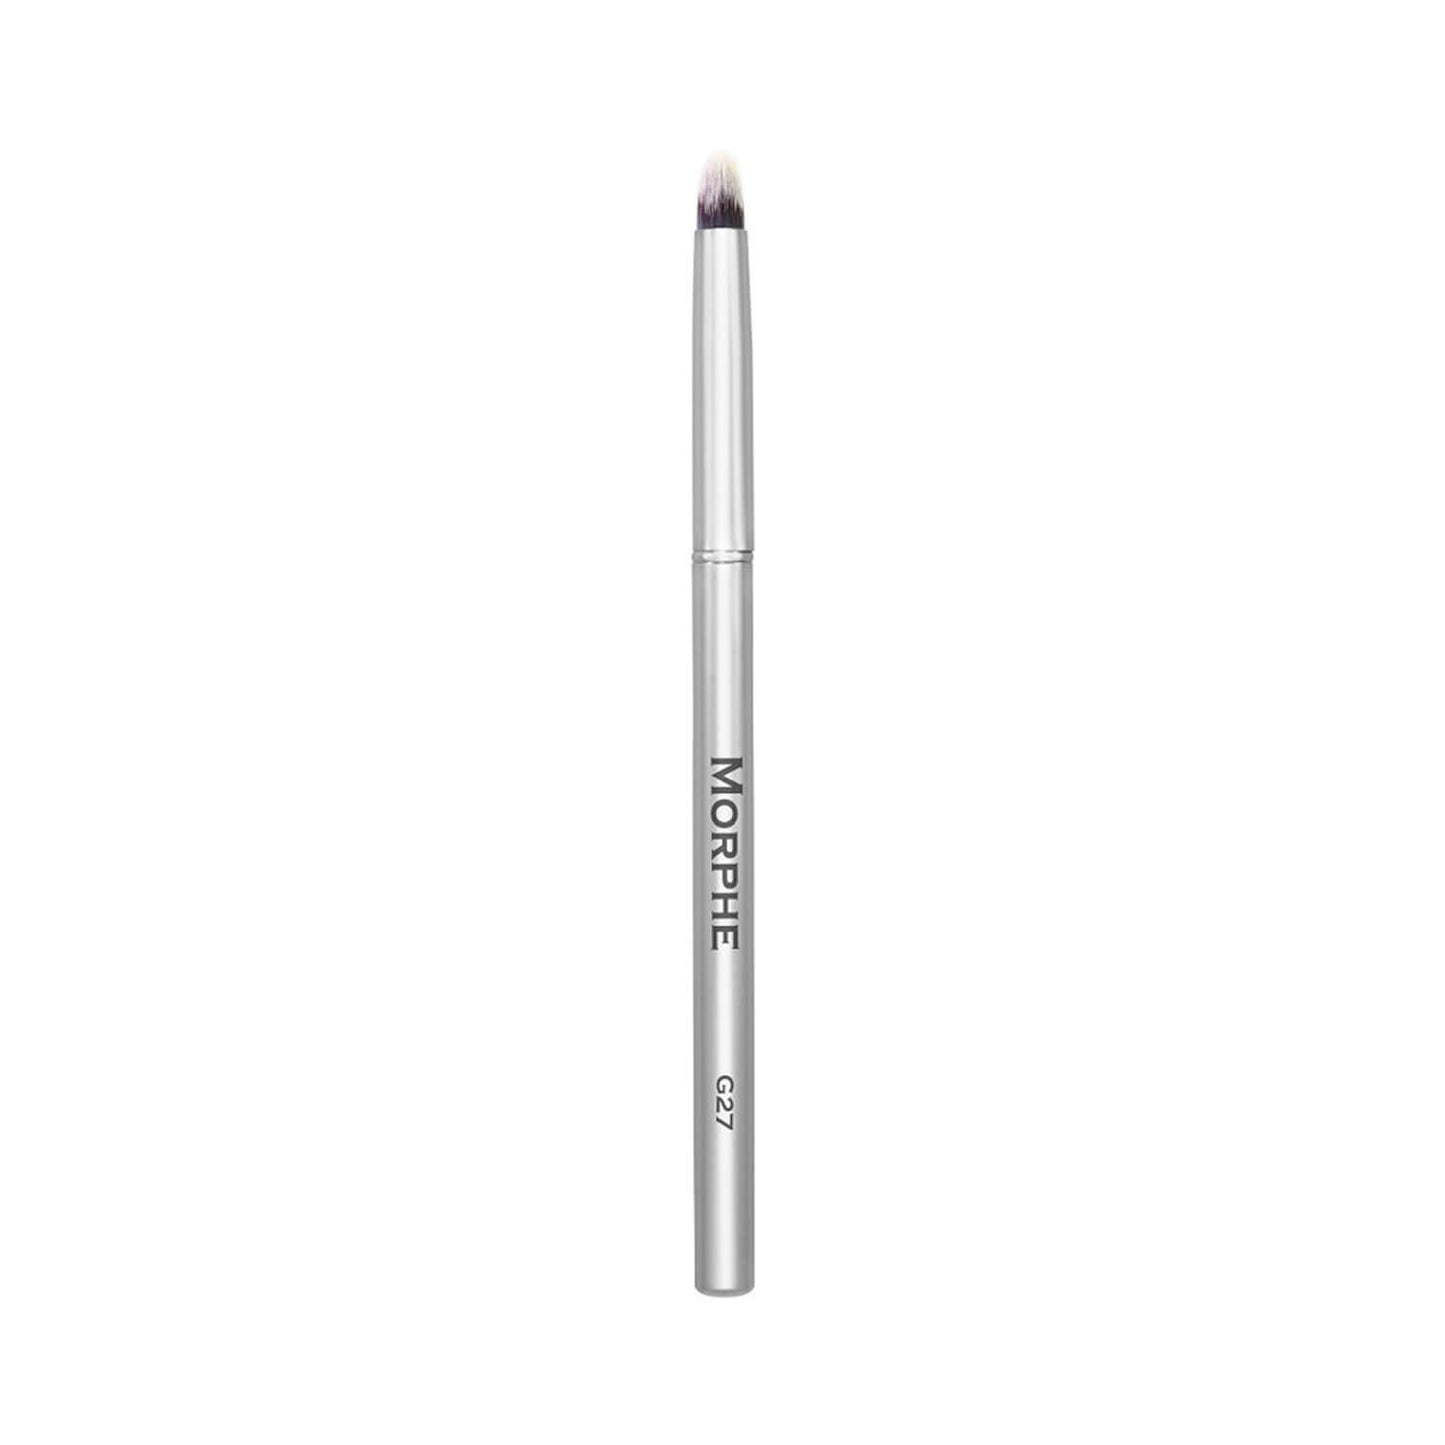 Morphe Cosmetics G27 Pencil Crease Brush